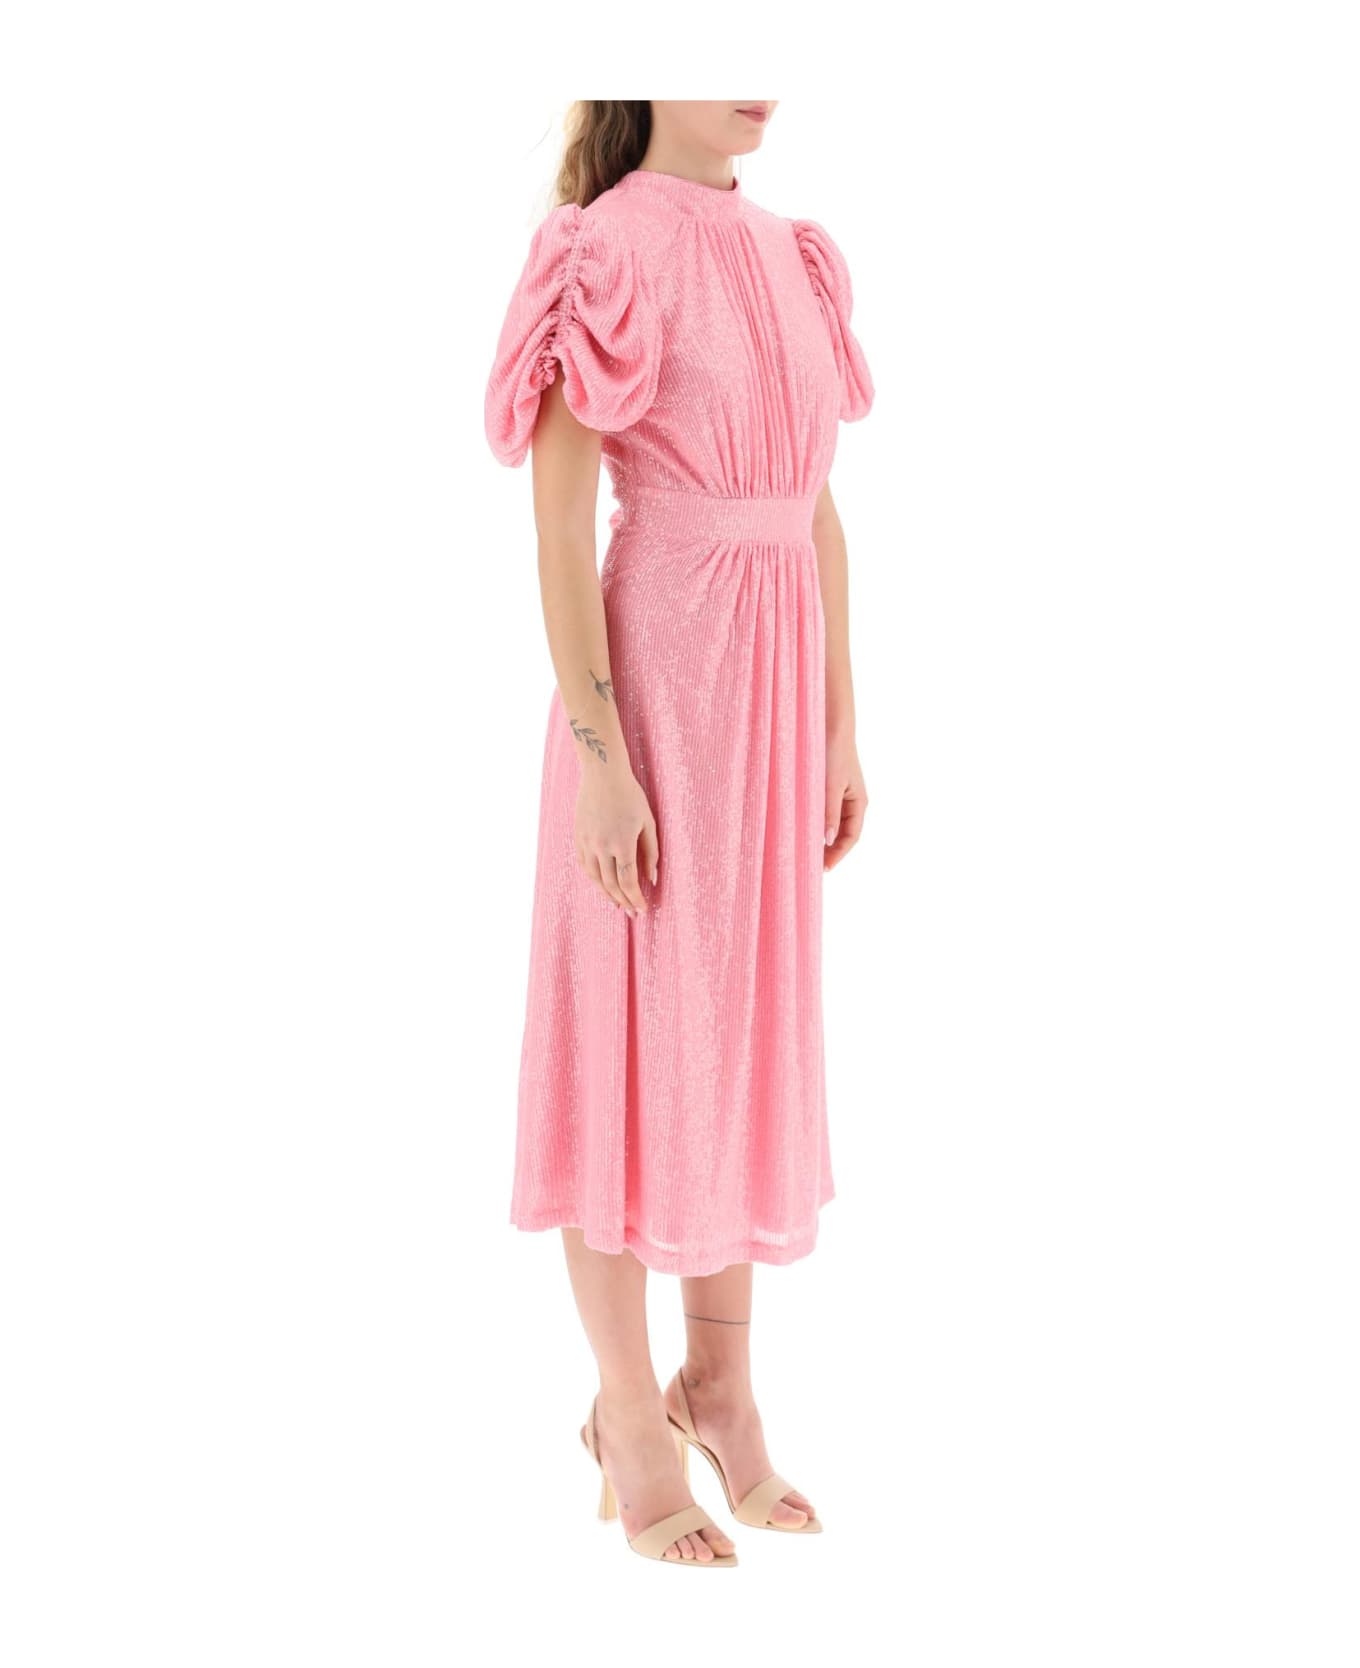 Rotate by Birger Christensen 'noon' Dress - BEGONIA PINK (Pink)